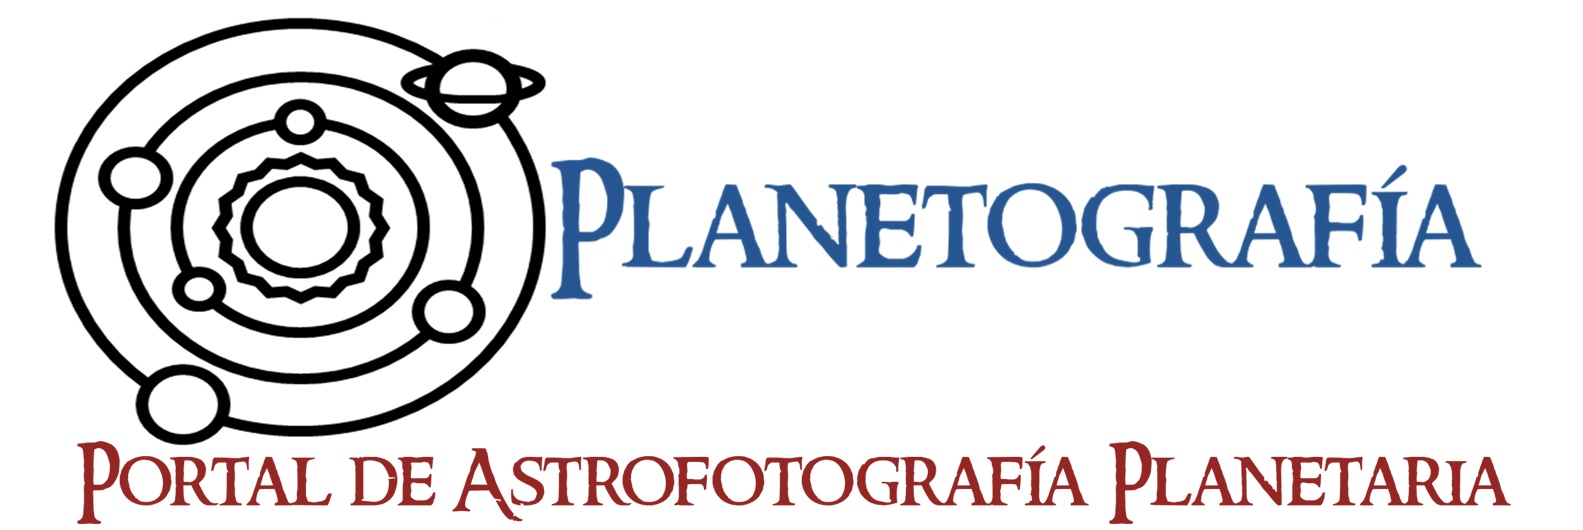 Planetografia